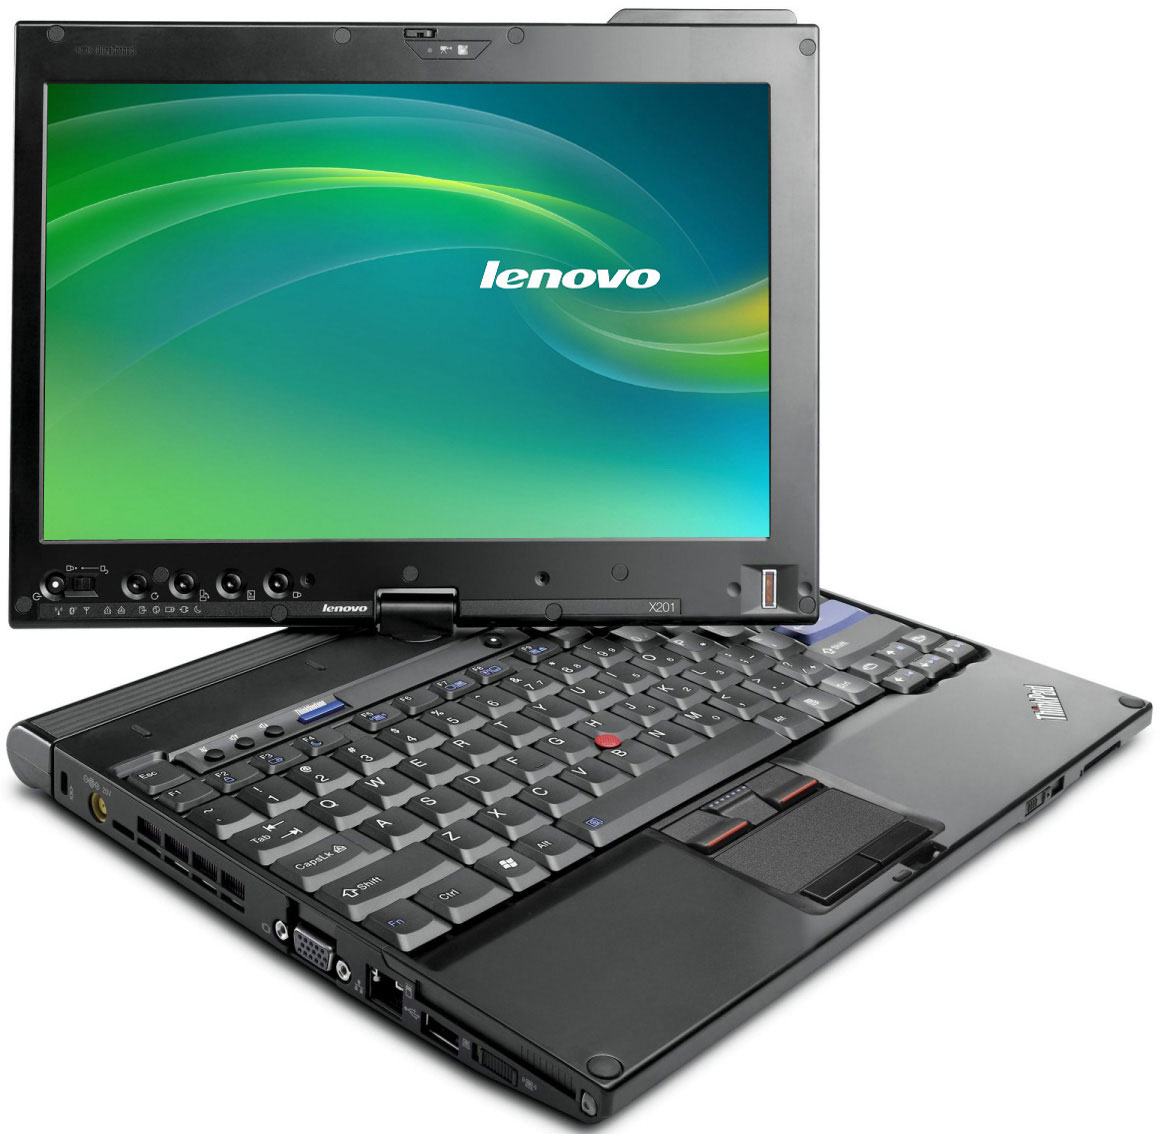 Lenovo ThinkPad X201 Series - Notebookcheck.net External Reviews